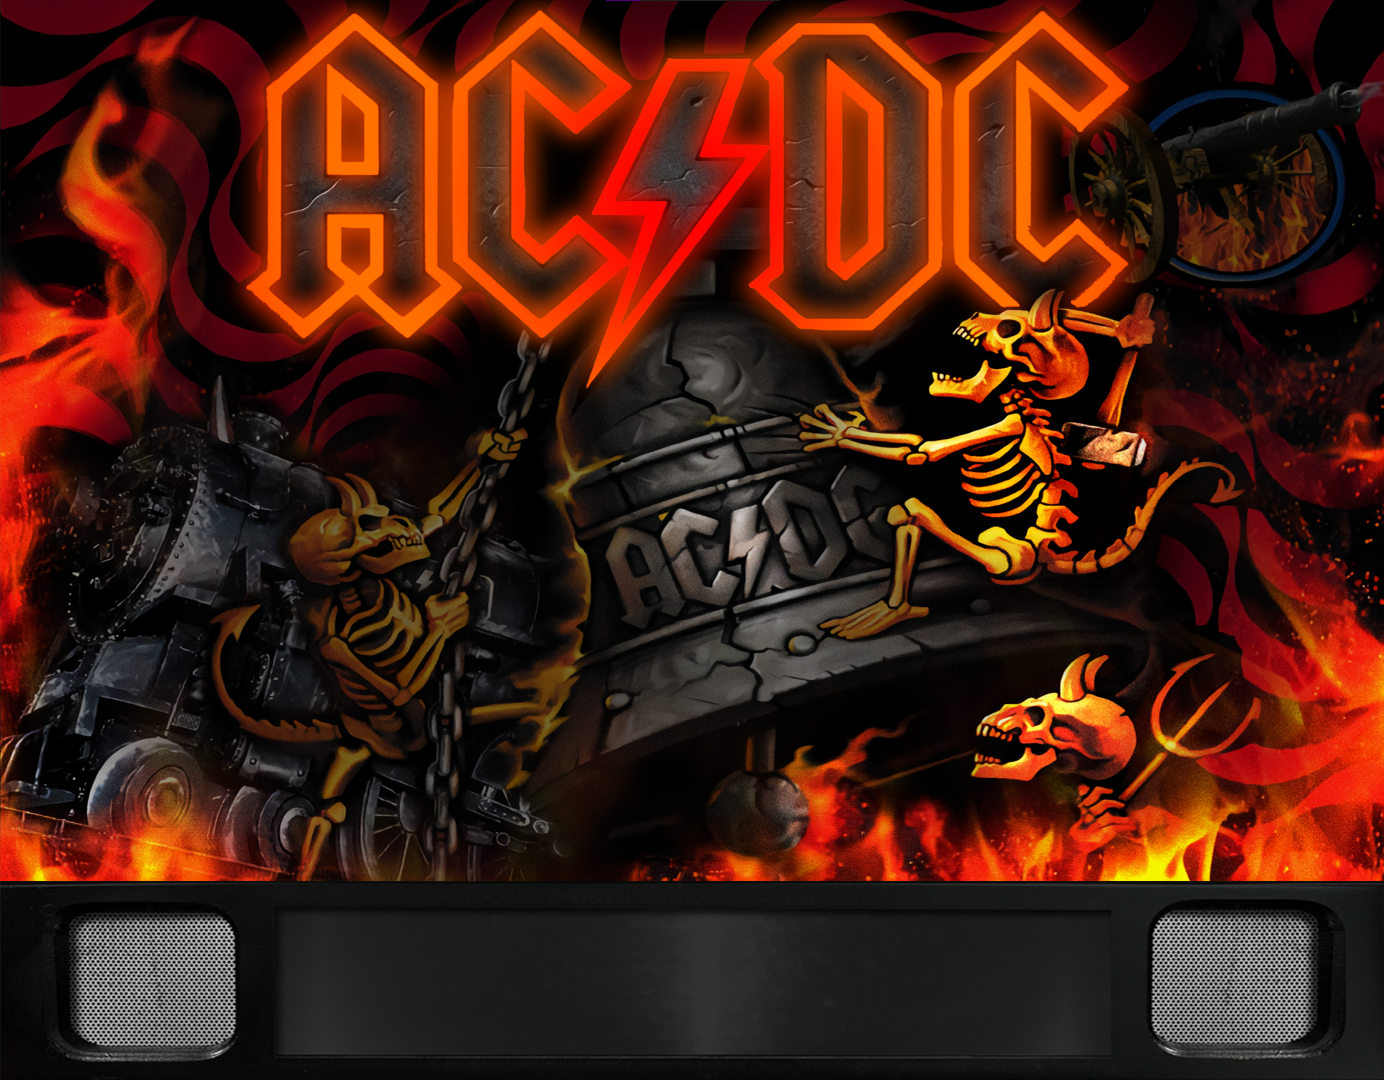 AC/DC Luci-Hells Bells Alt B2S